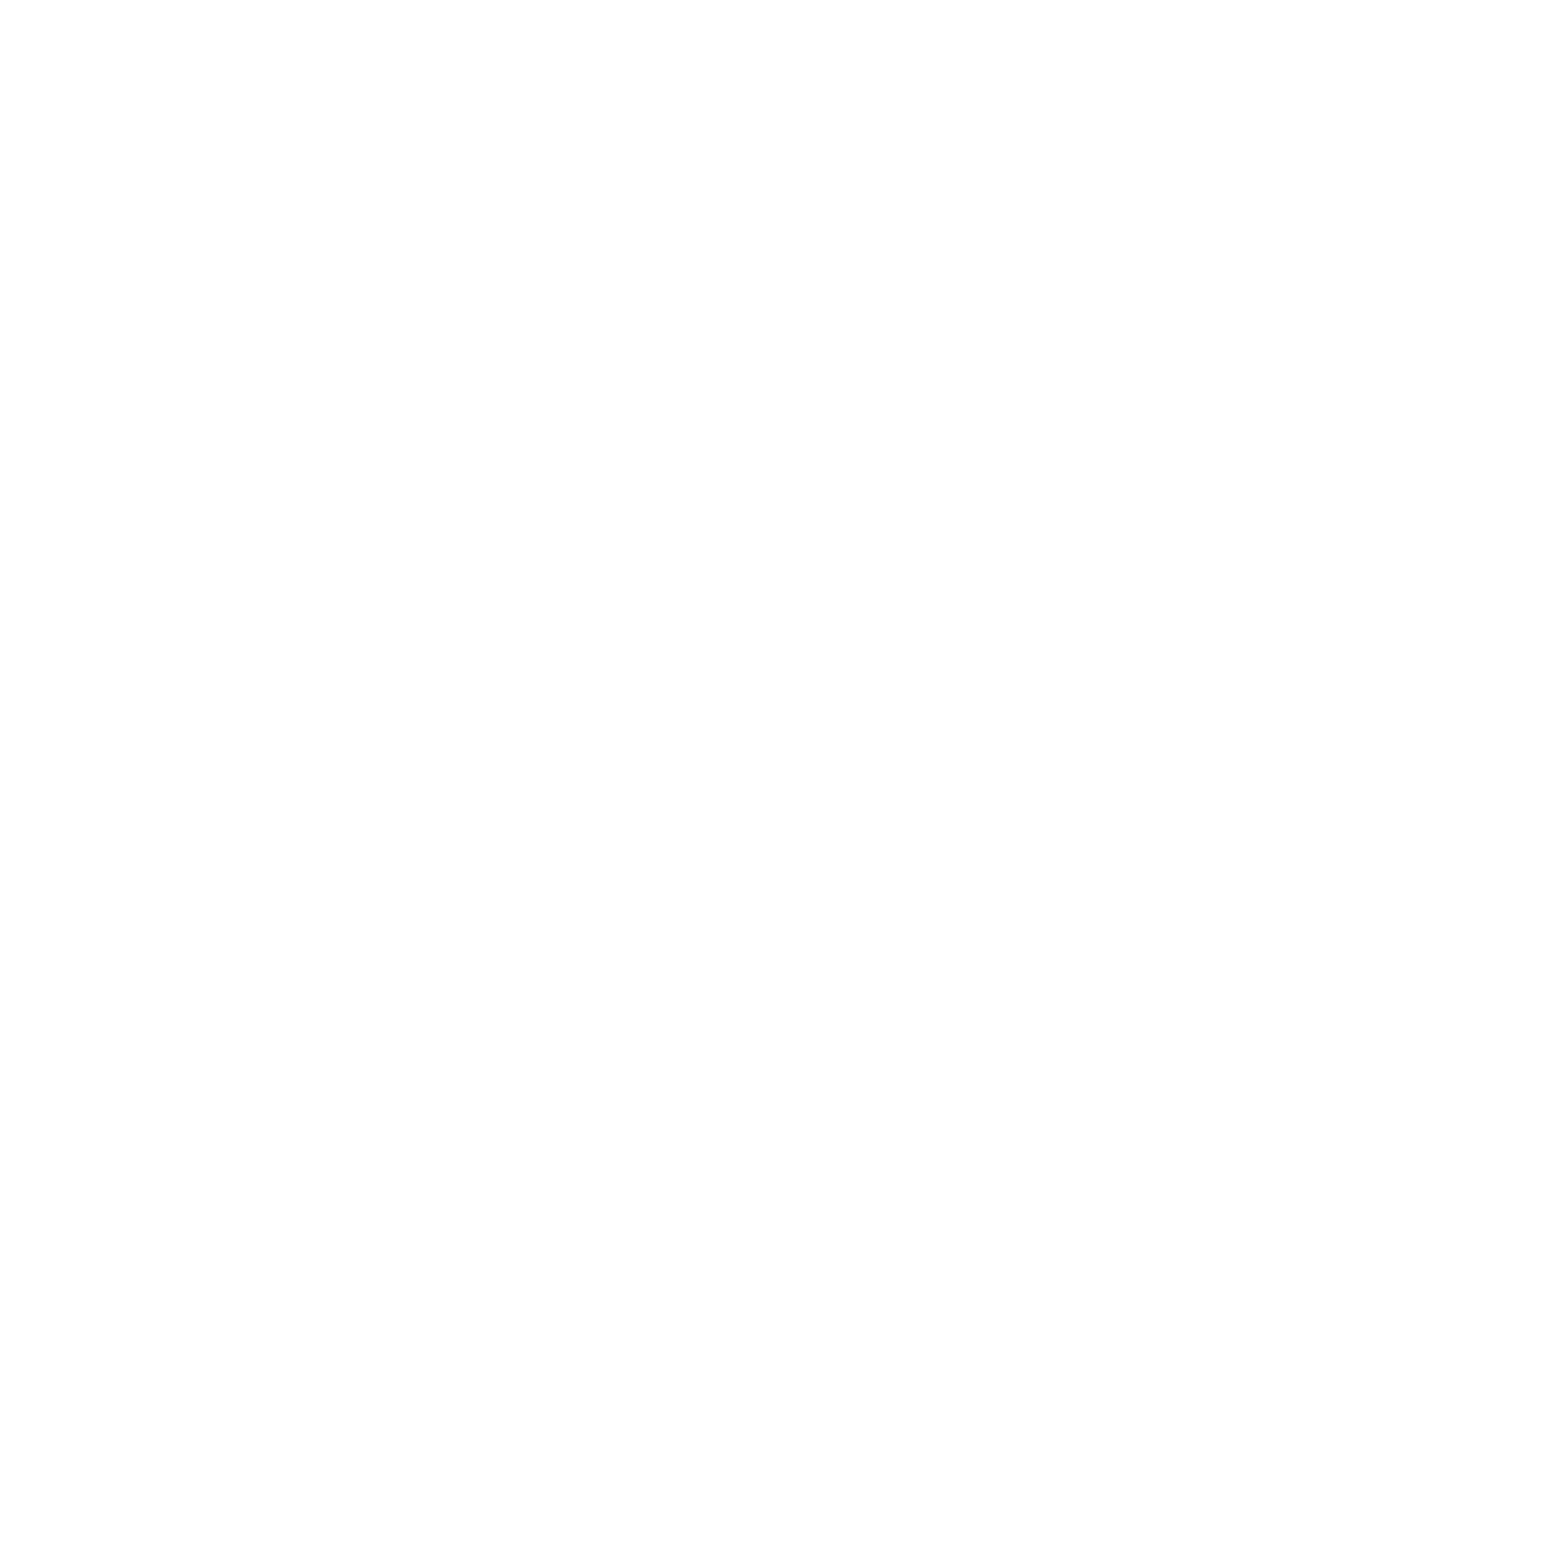 SpringWorks Therapeutics logo for dark backgrounds (transparent PNG)